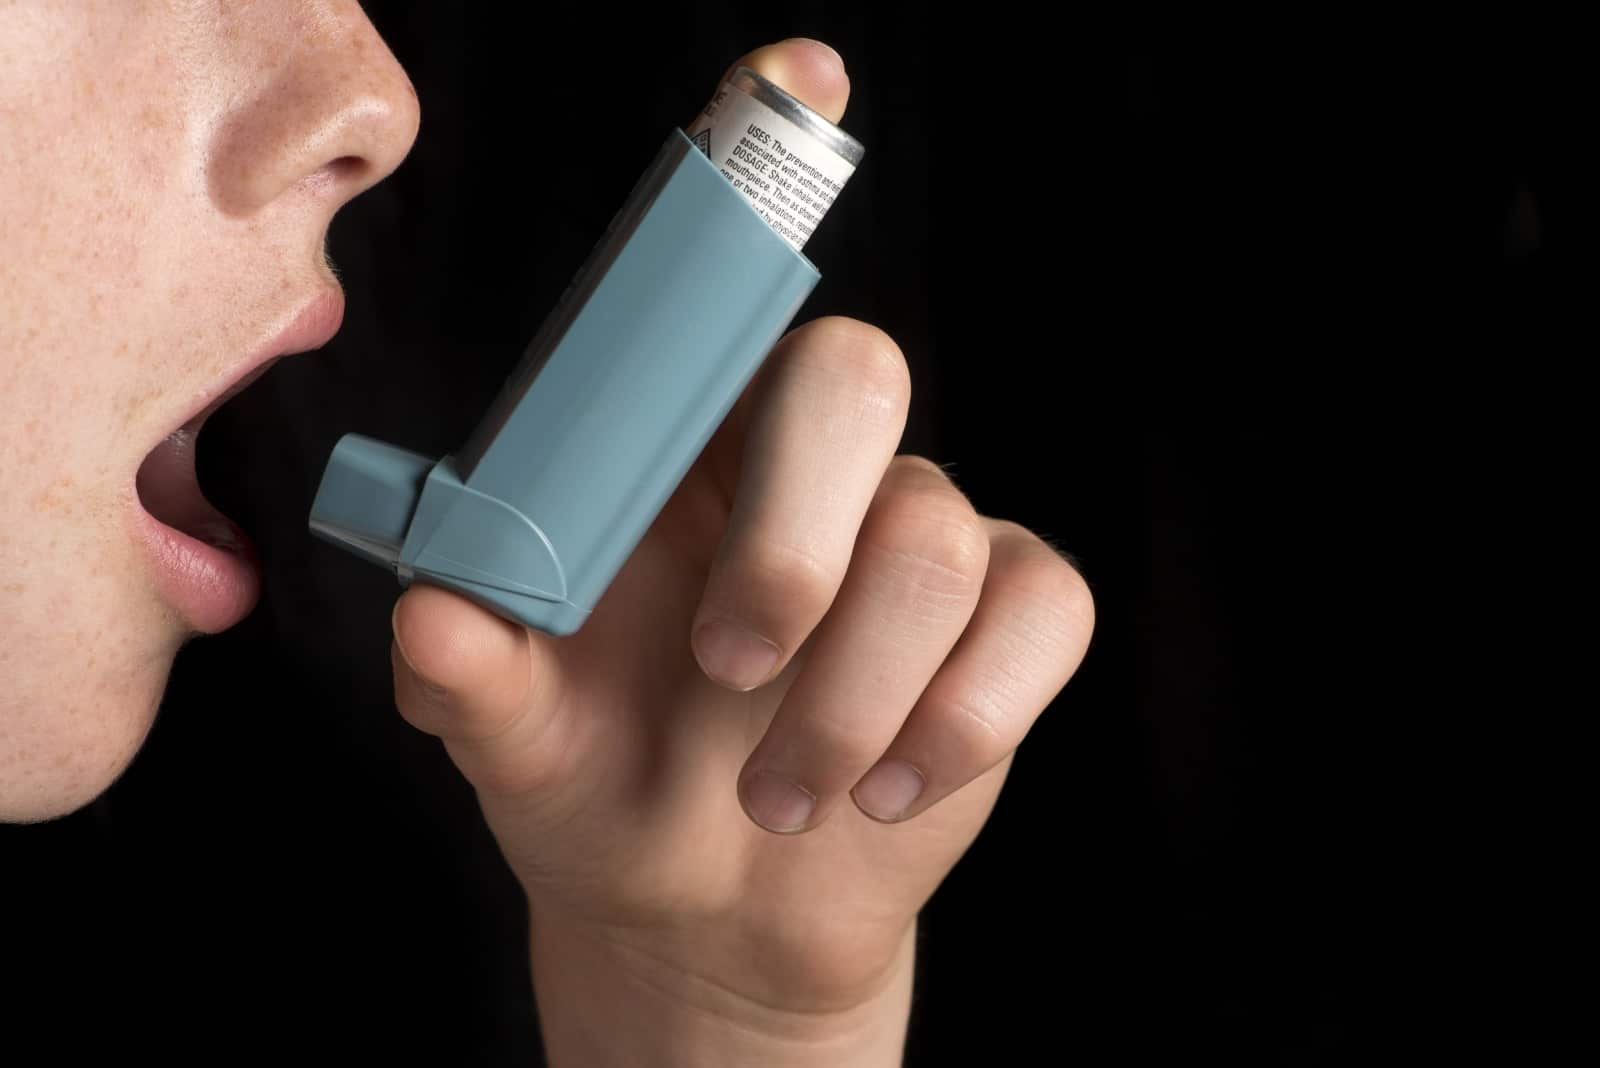 Checklist for using your ventolin inhaler correctly